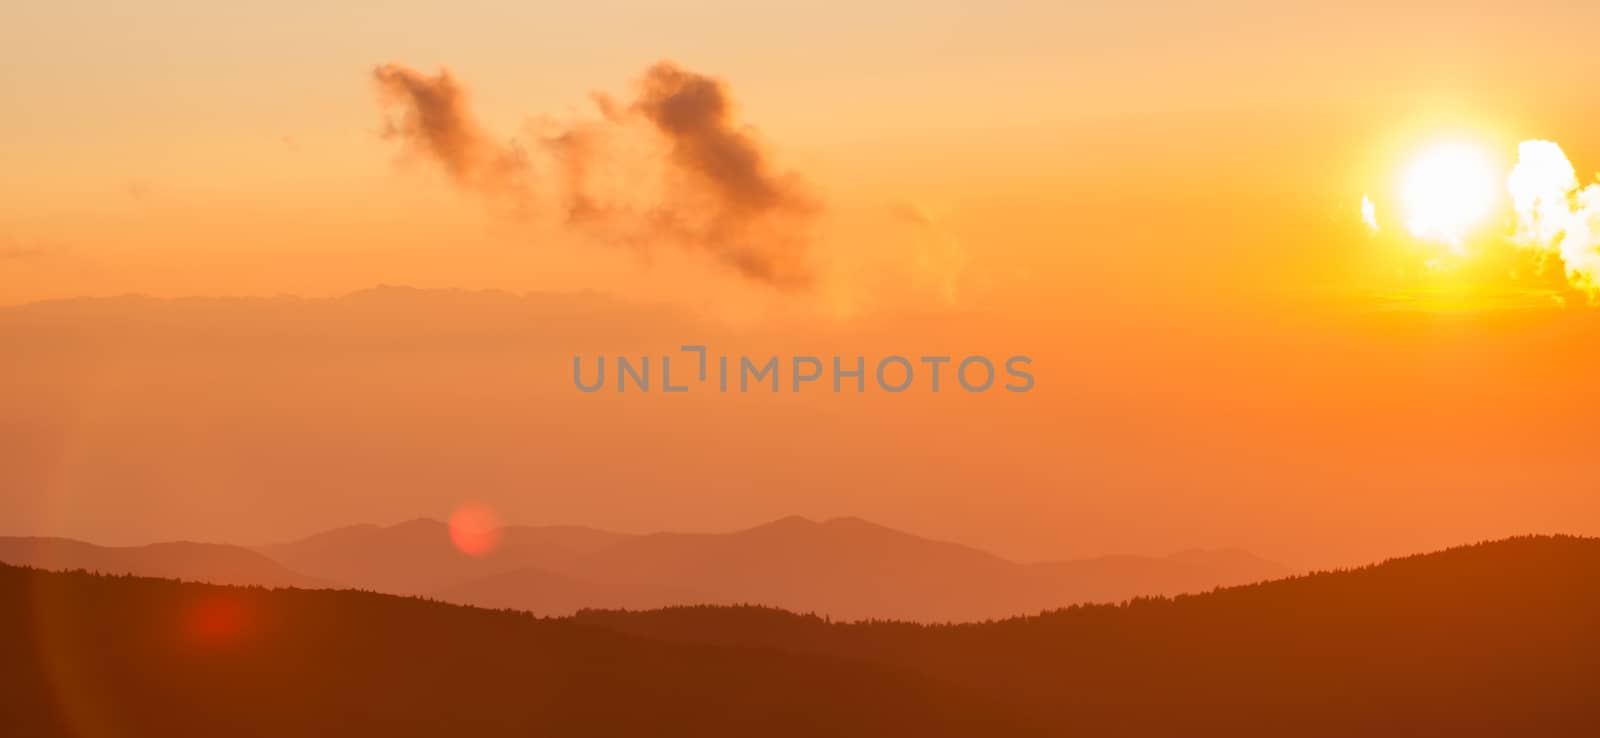 Blue Ridge Parkway Autumn Sunset over Appalachian Mountains  by digidreamgrafix